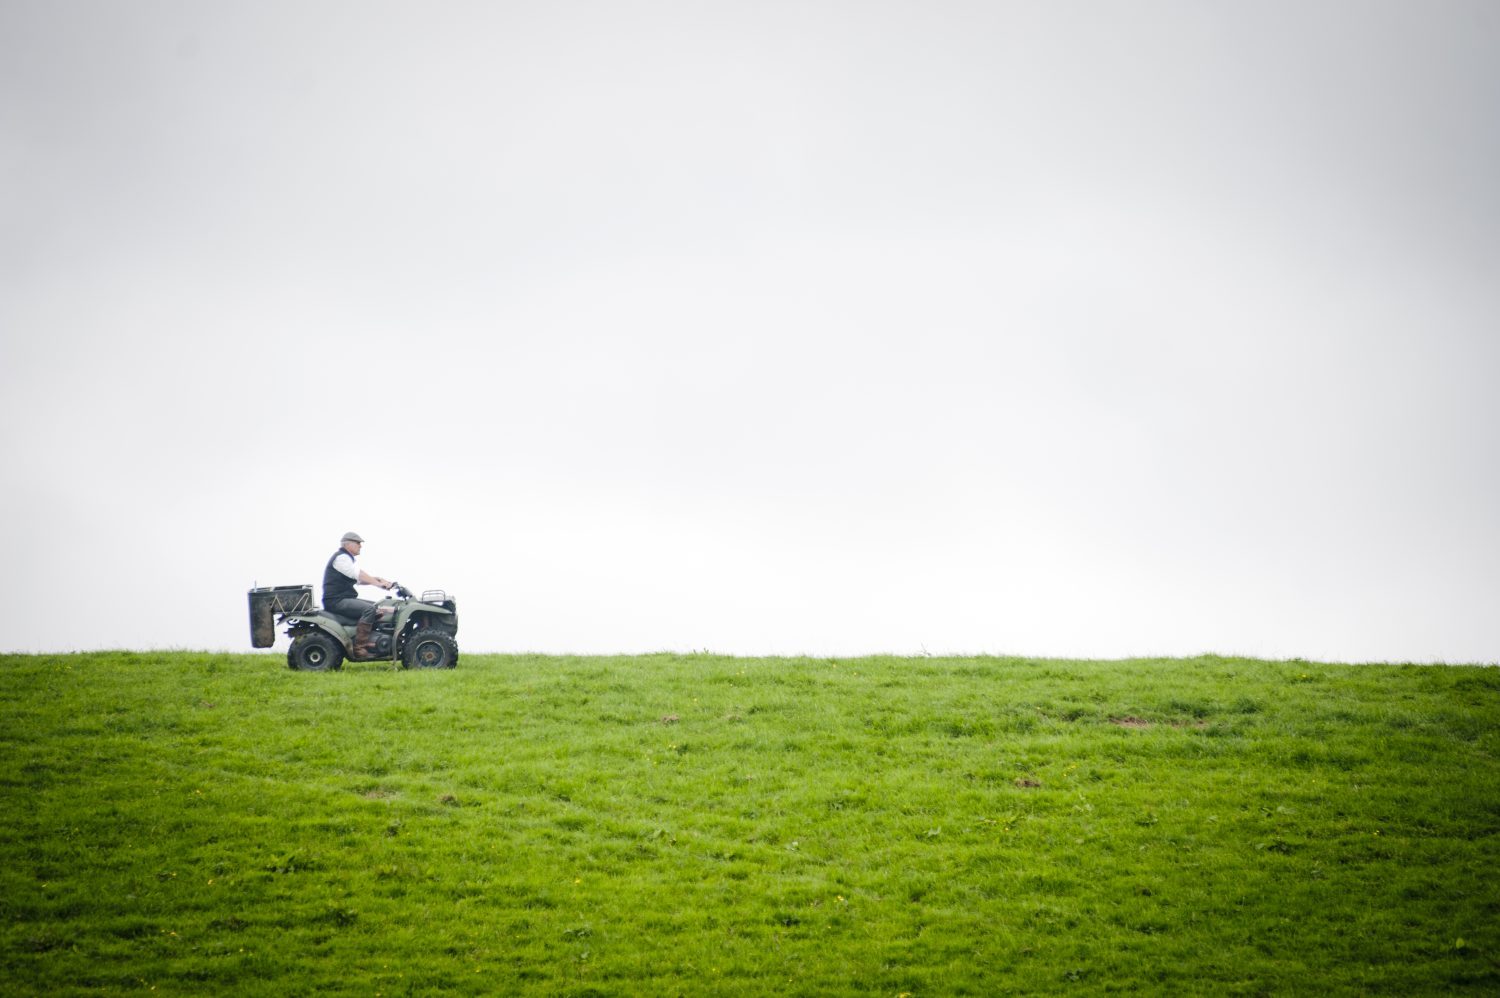 dairy farmer inspecting his grass fields on a quad bike.